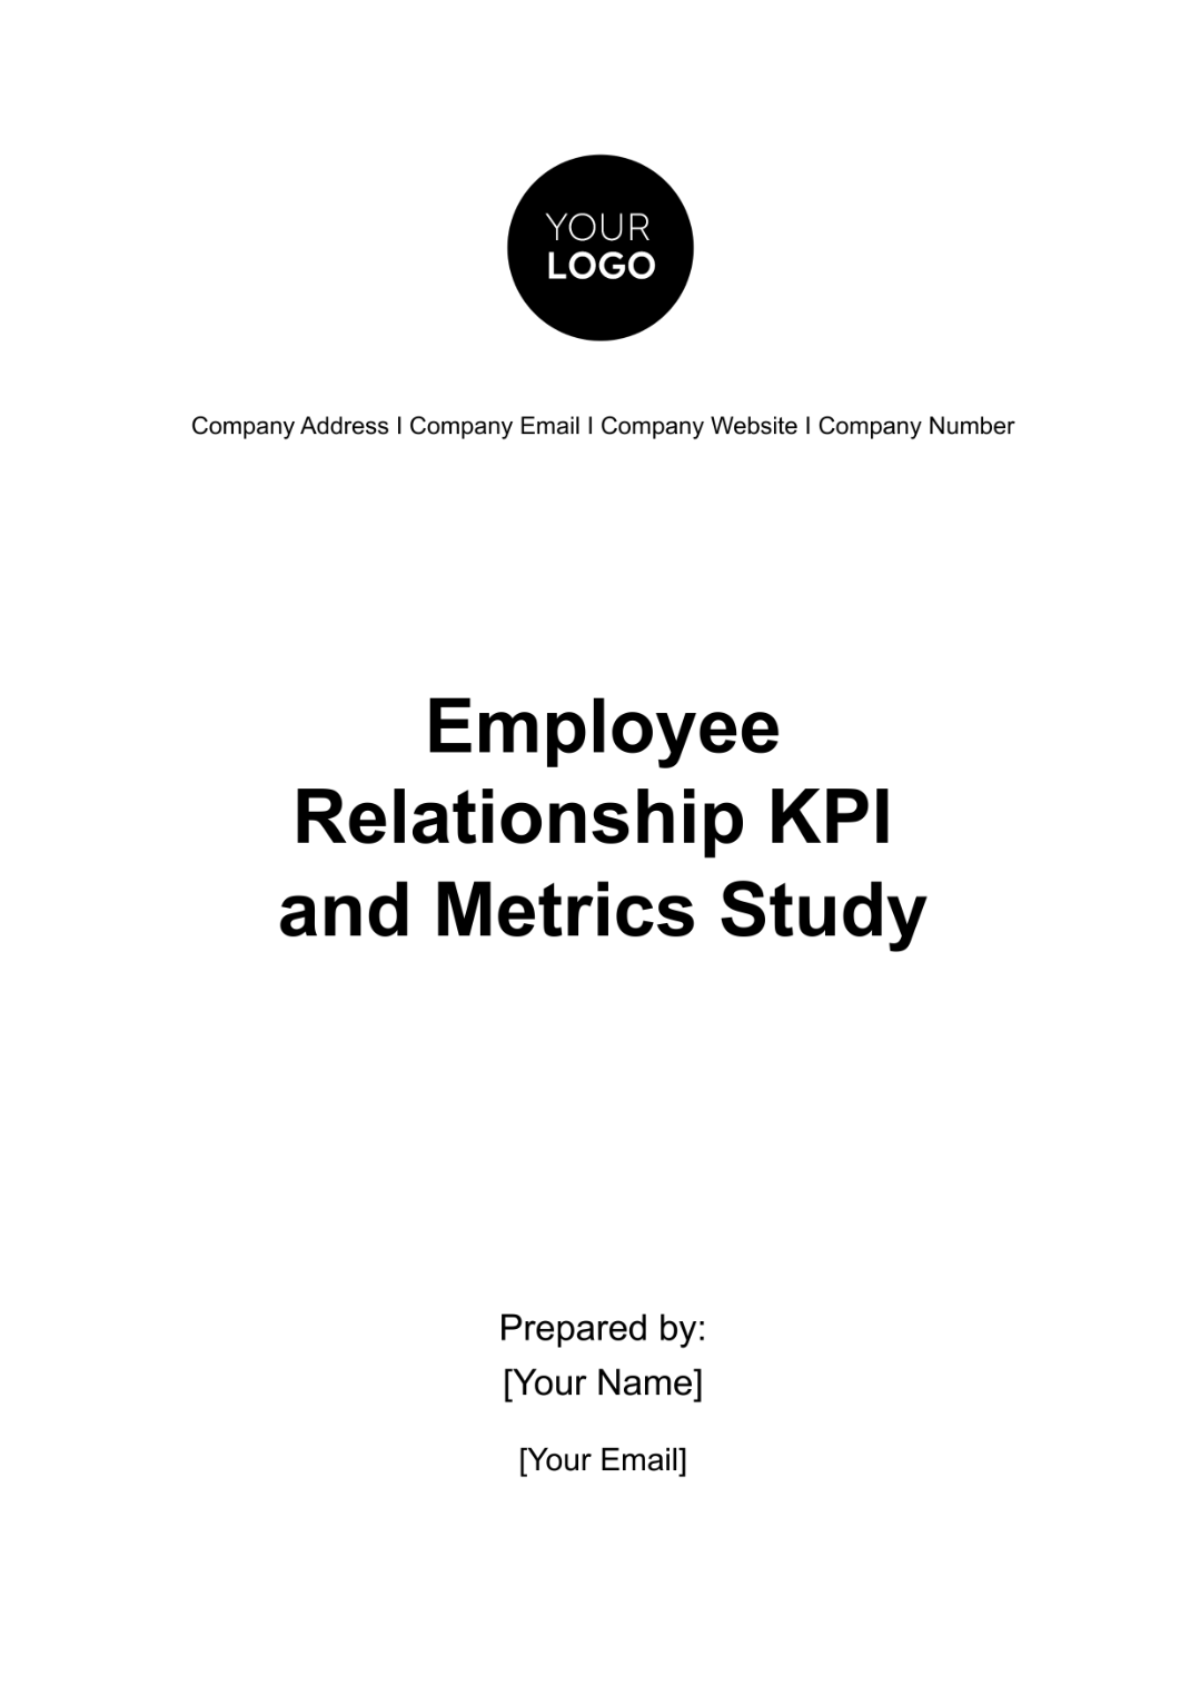 Employee Relationship KPI and Metrics Study HR Template